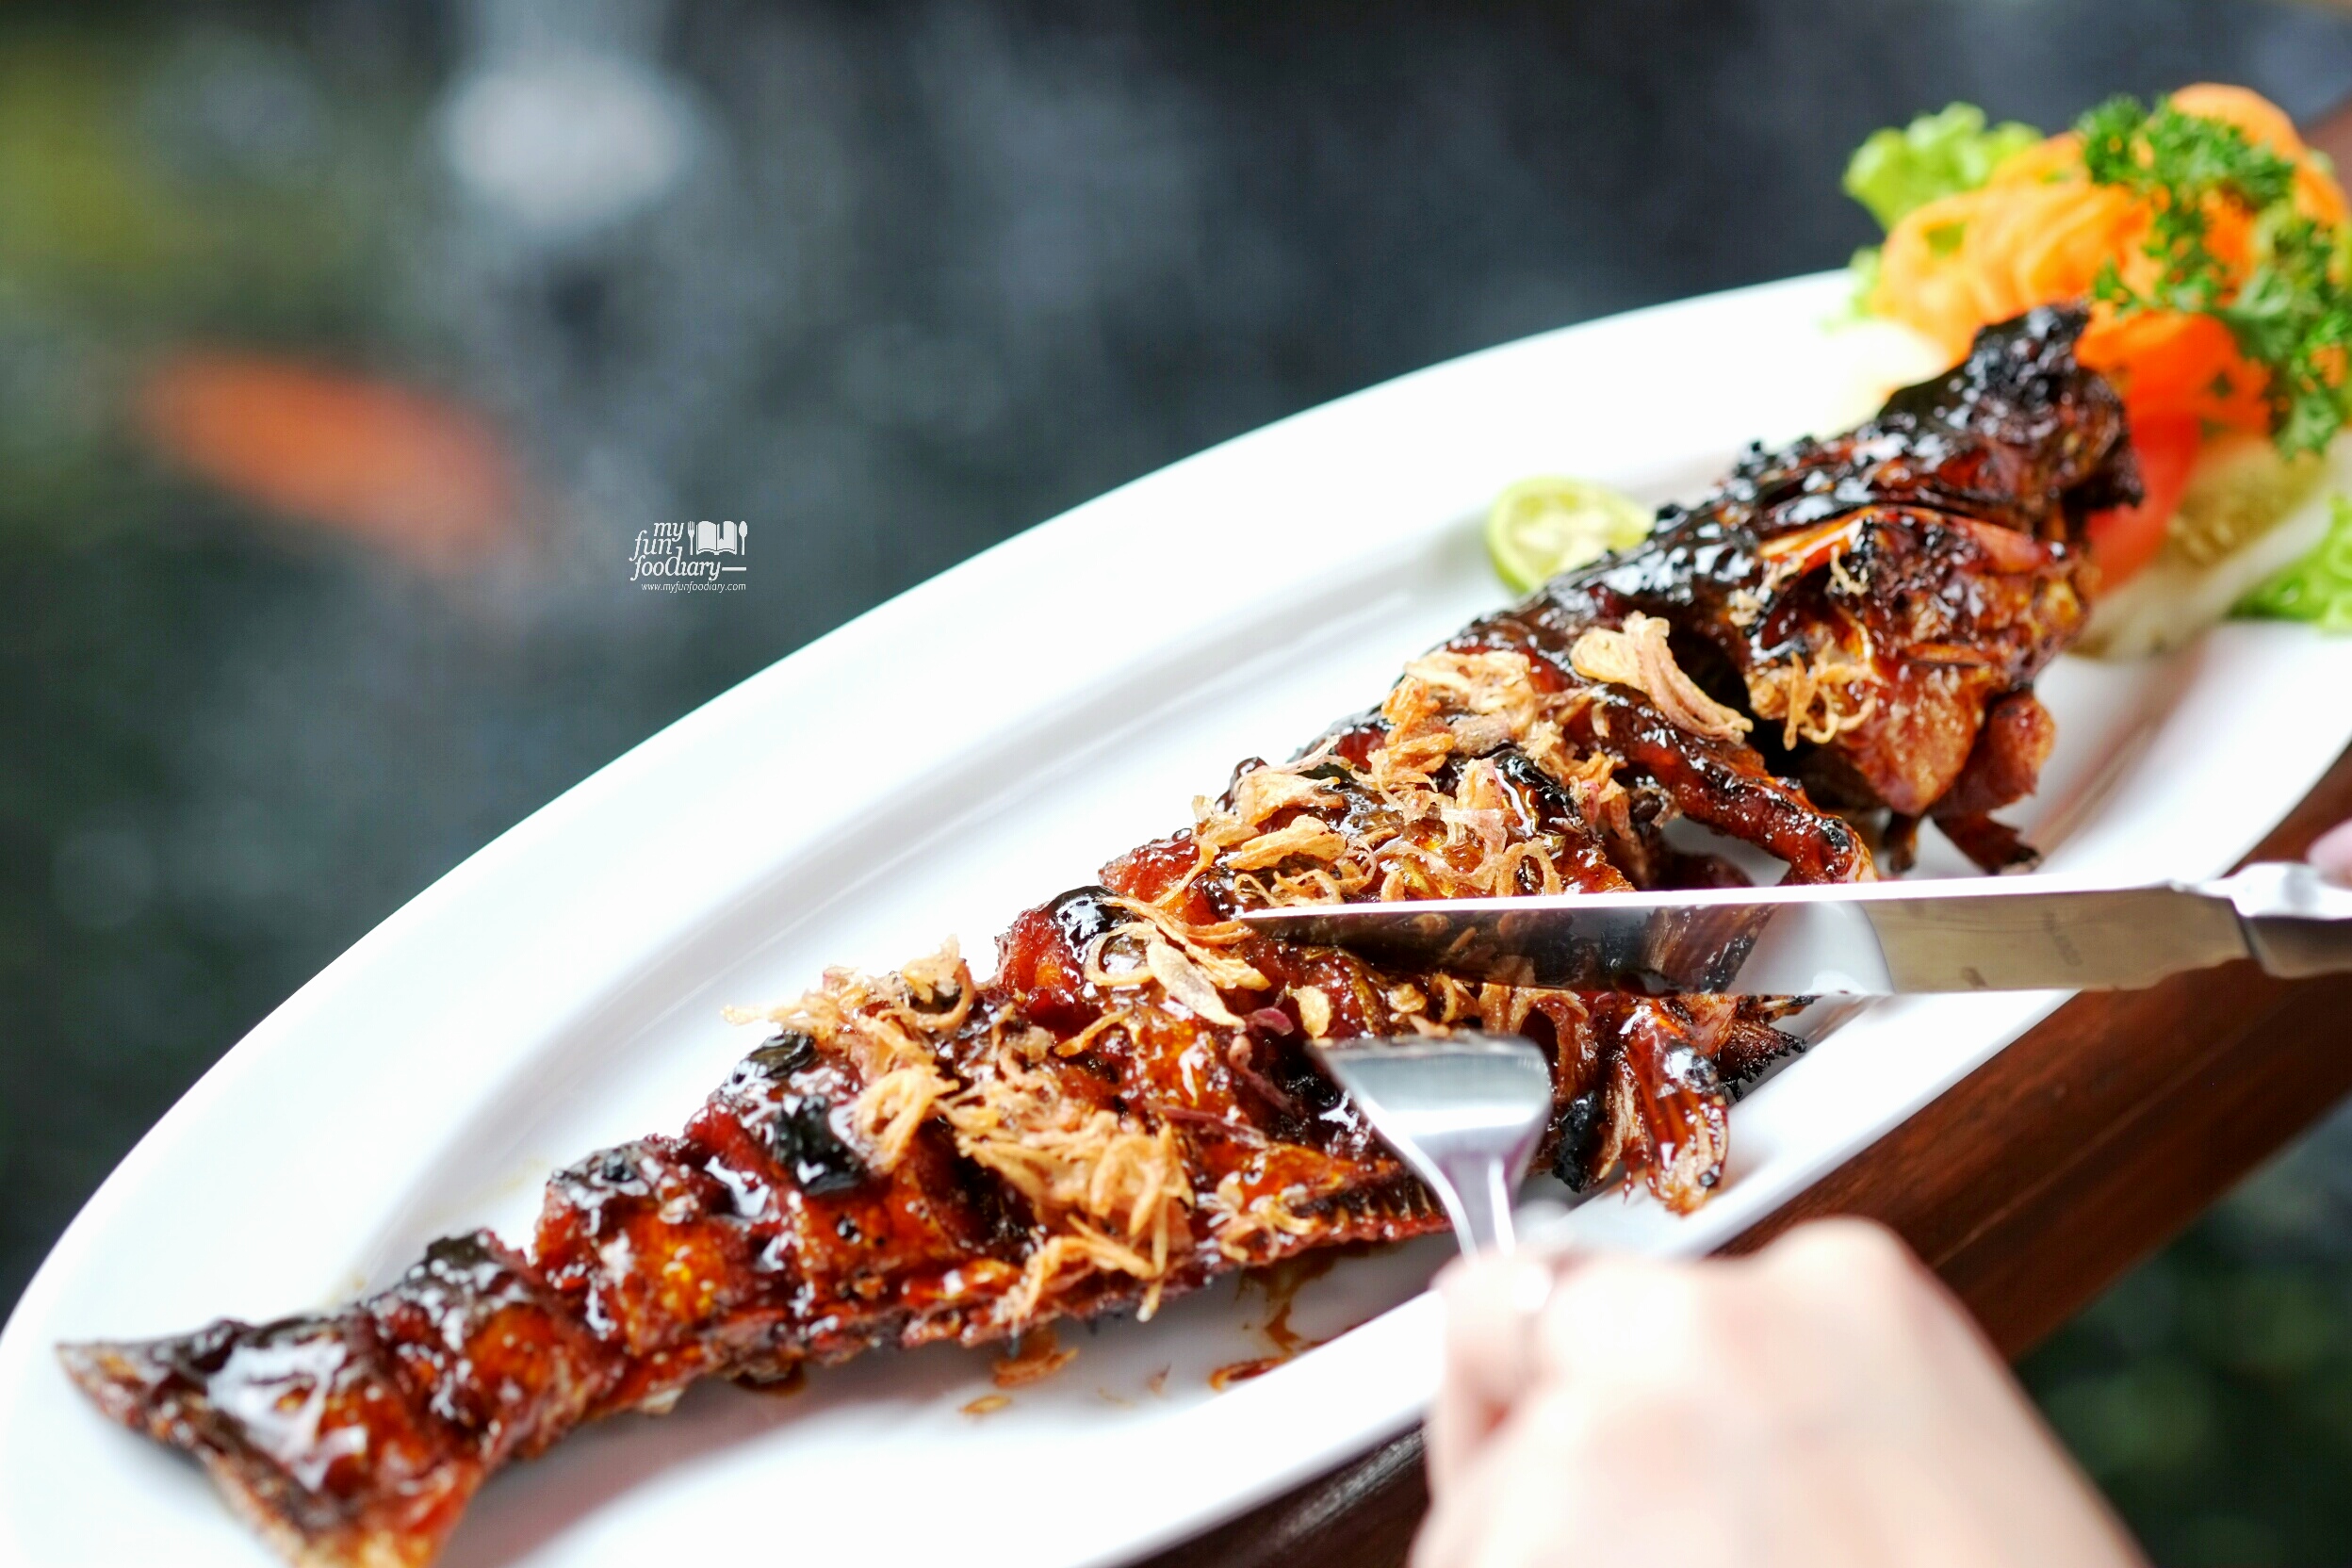 Ikan Patin Bakar at Rempah Wangi Restaurant by Myfunfoodiary-